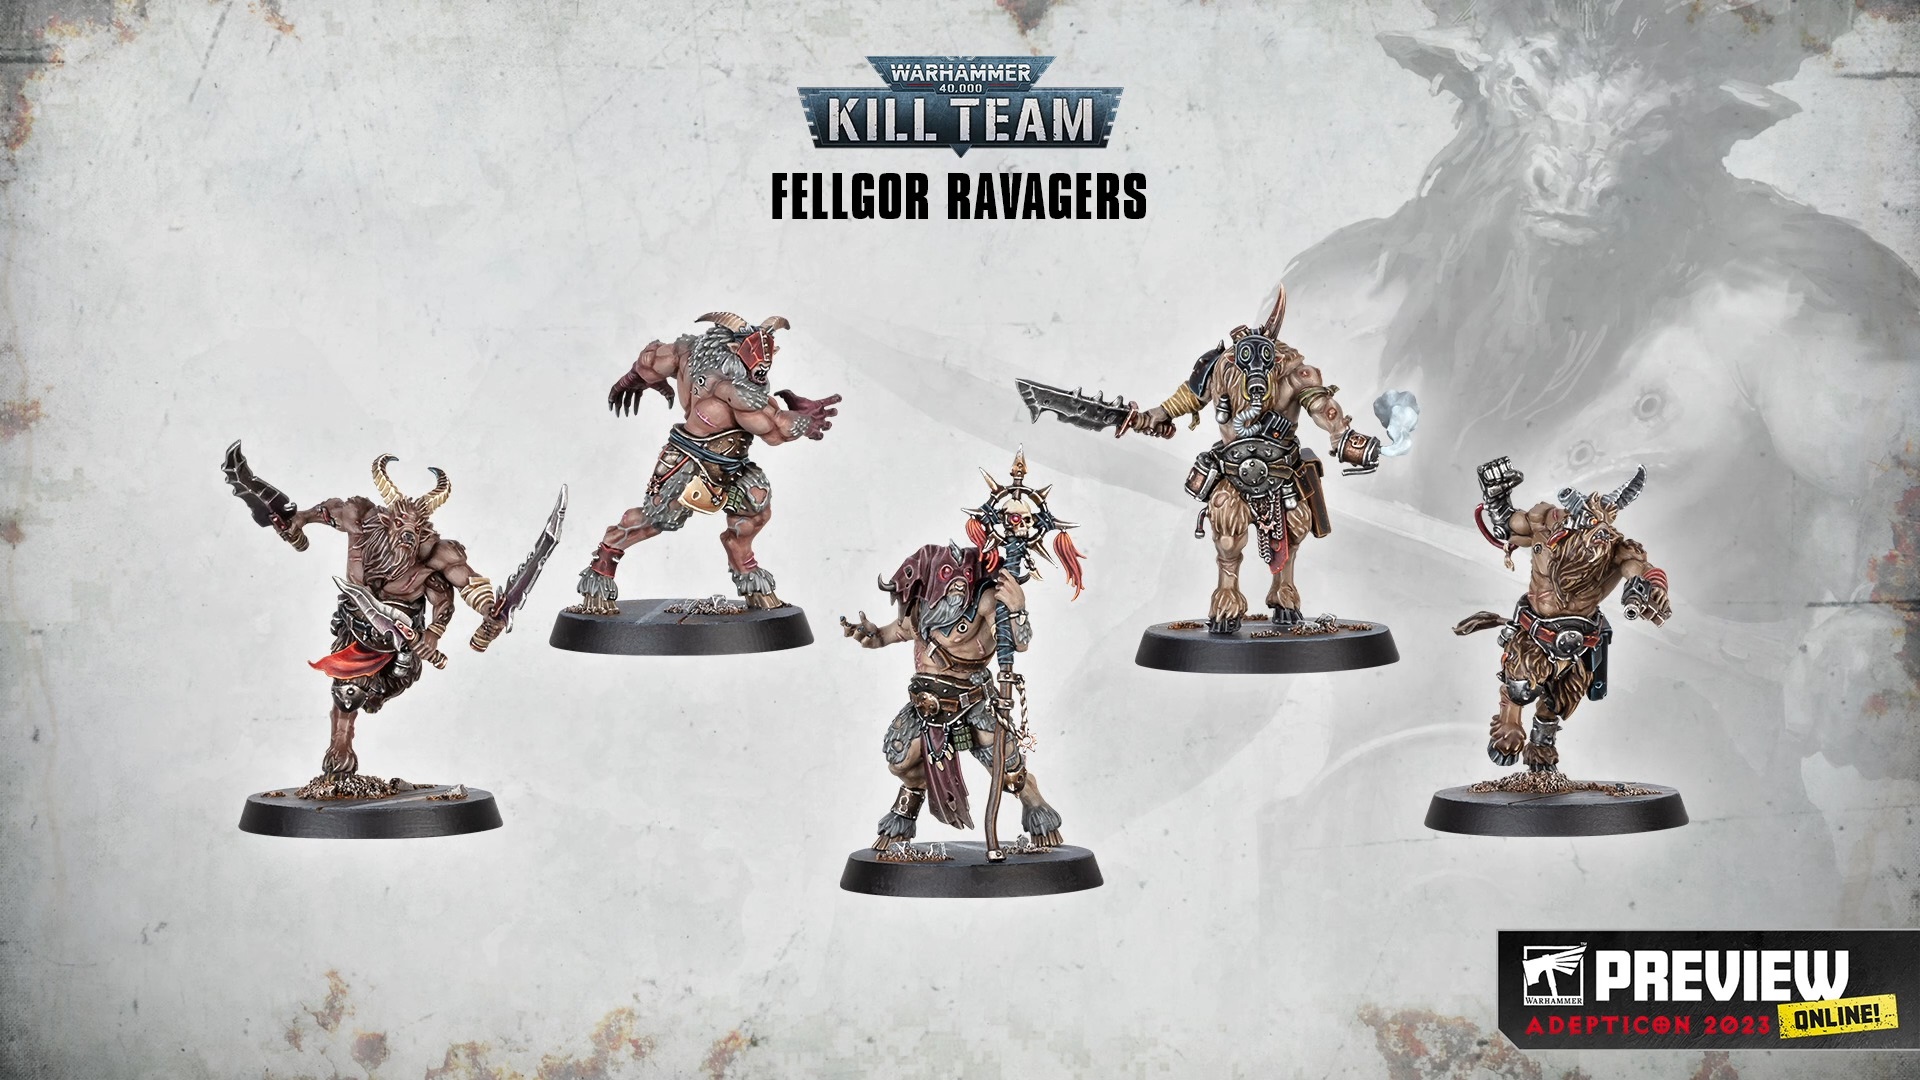 Fellgor Ravagers #2 - Warhammer 40K Kill Team